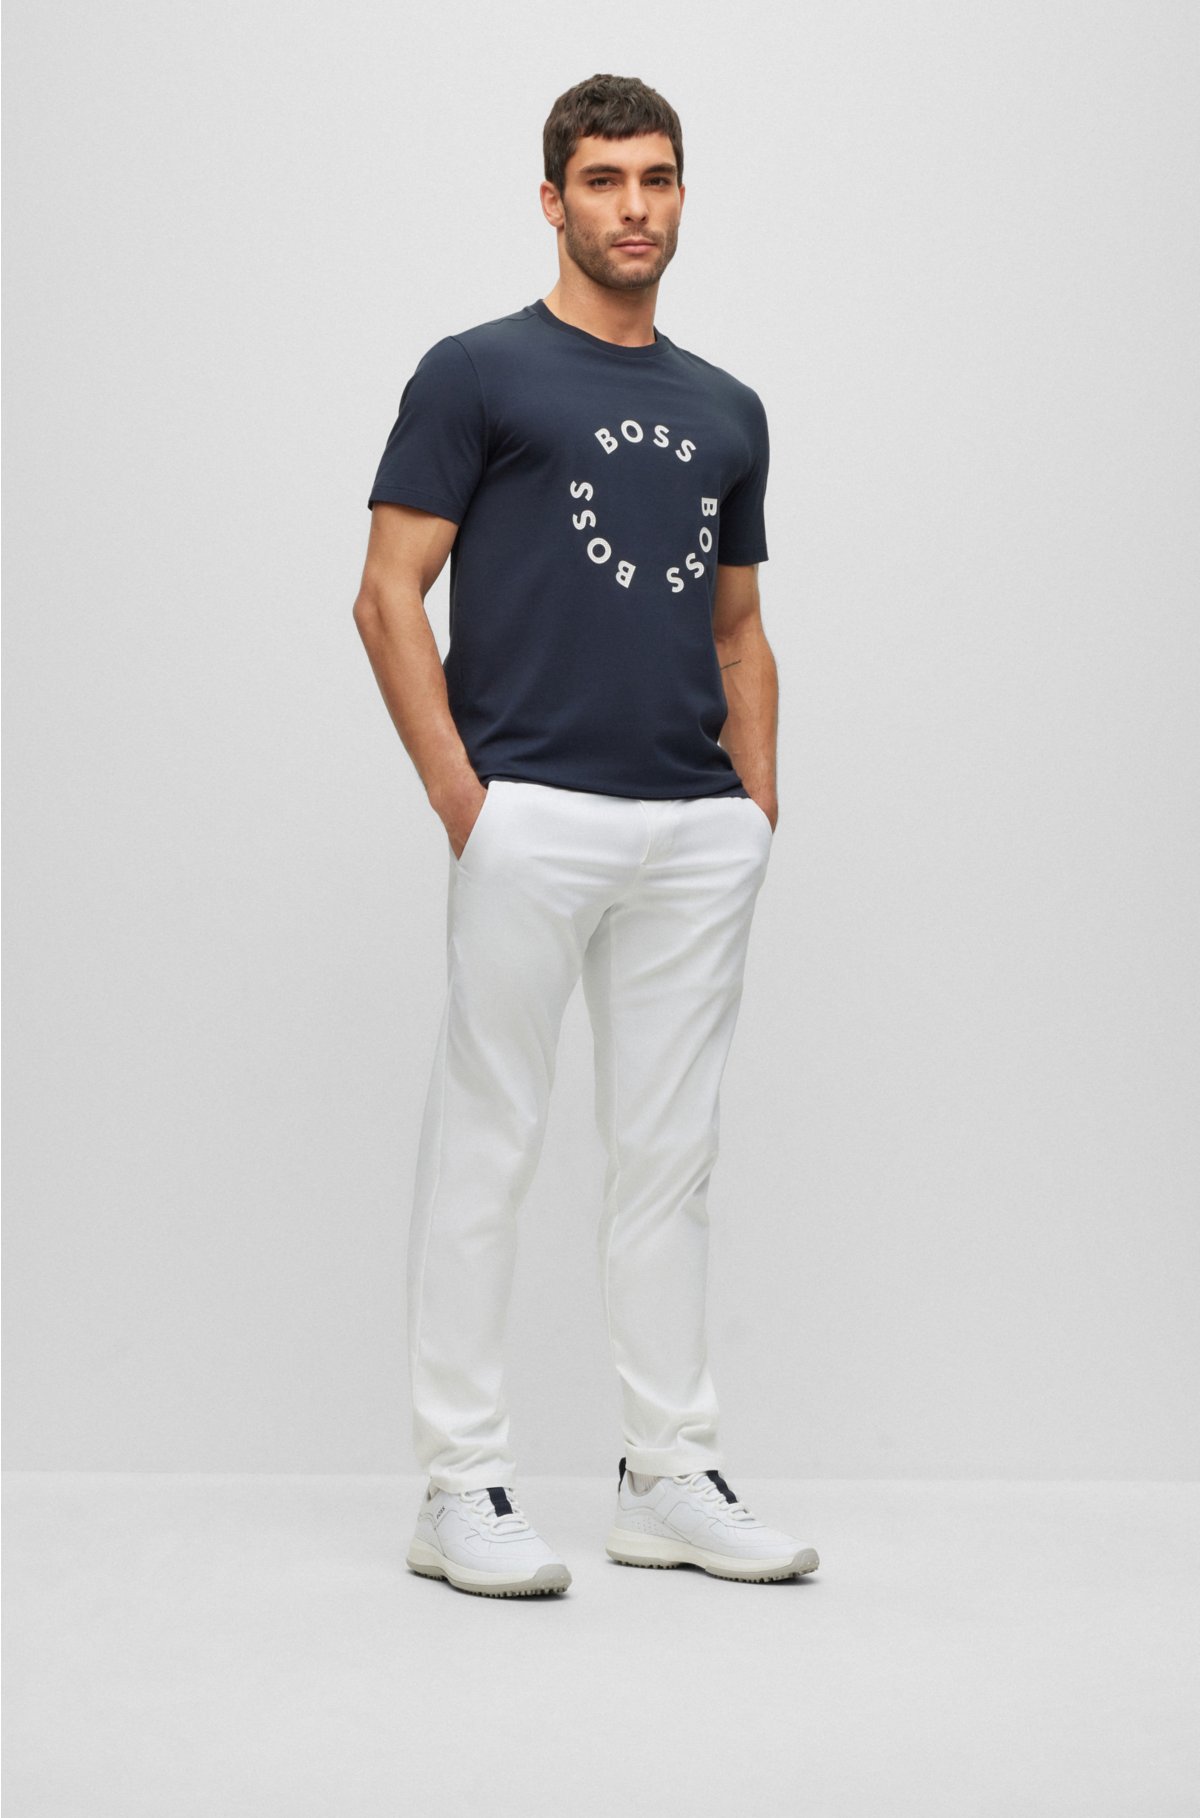 BOSS - T-shirt Stretch-cotton circle with prints logo